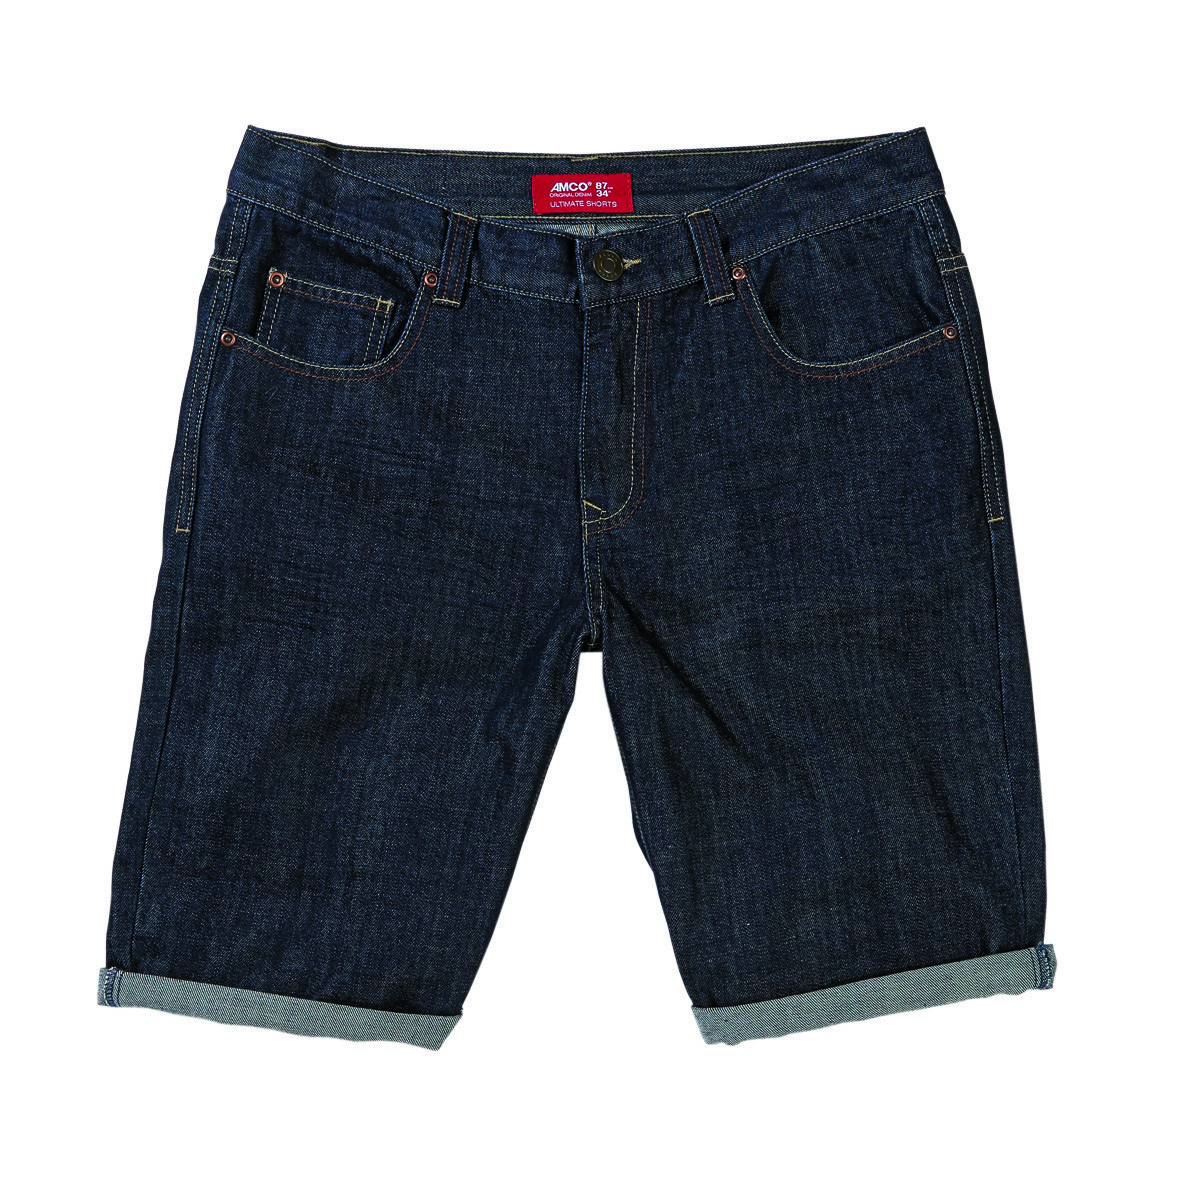 The Warehouse Amco Men's Denim Shorts $39